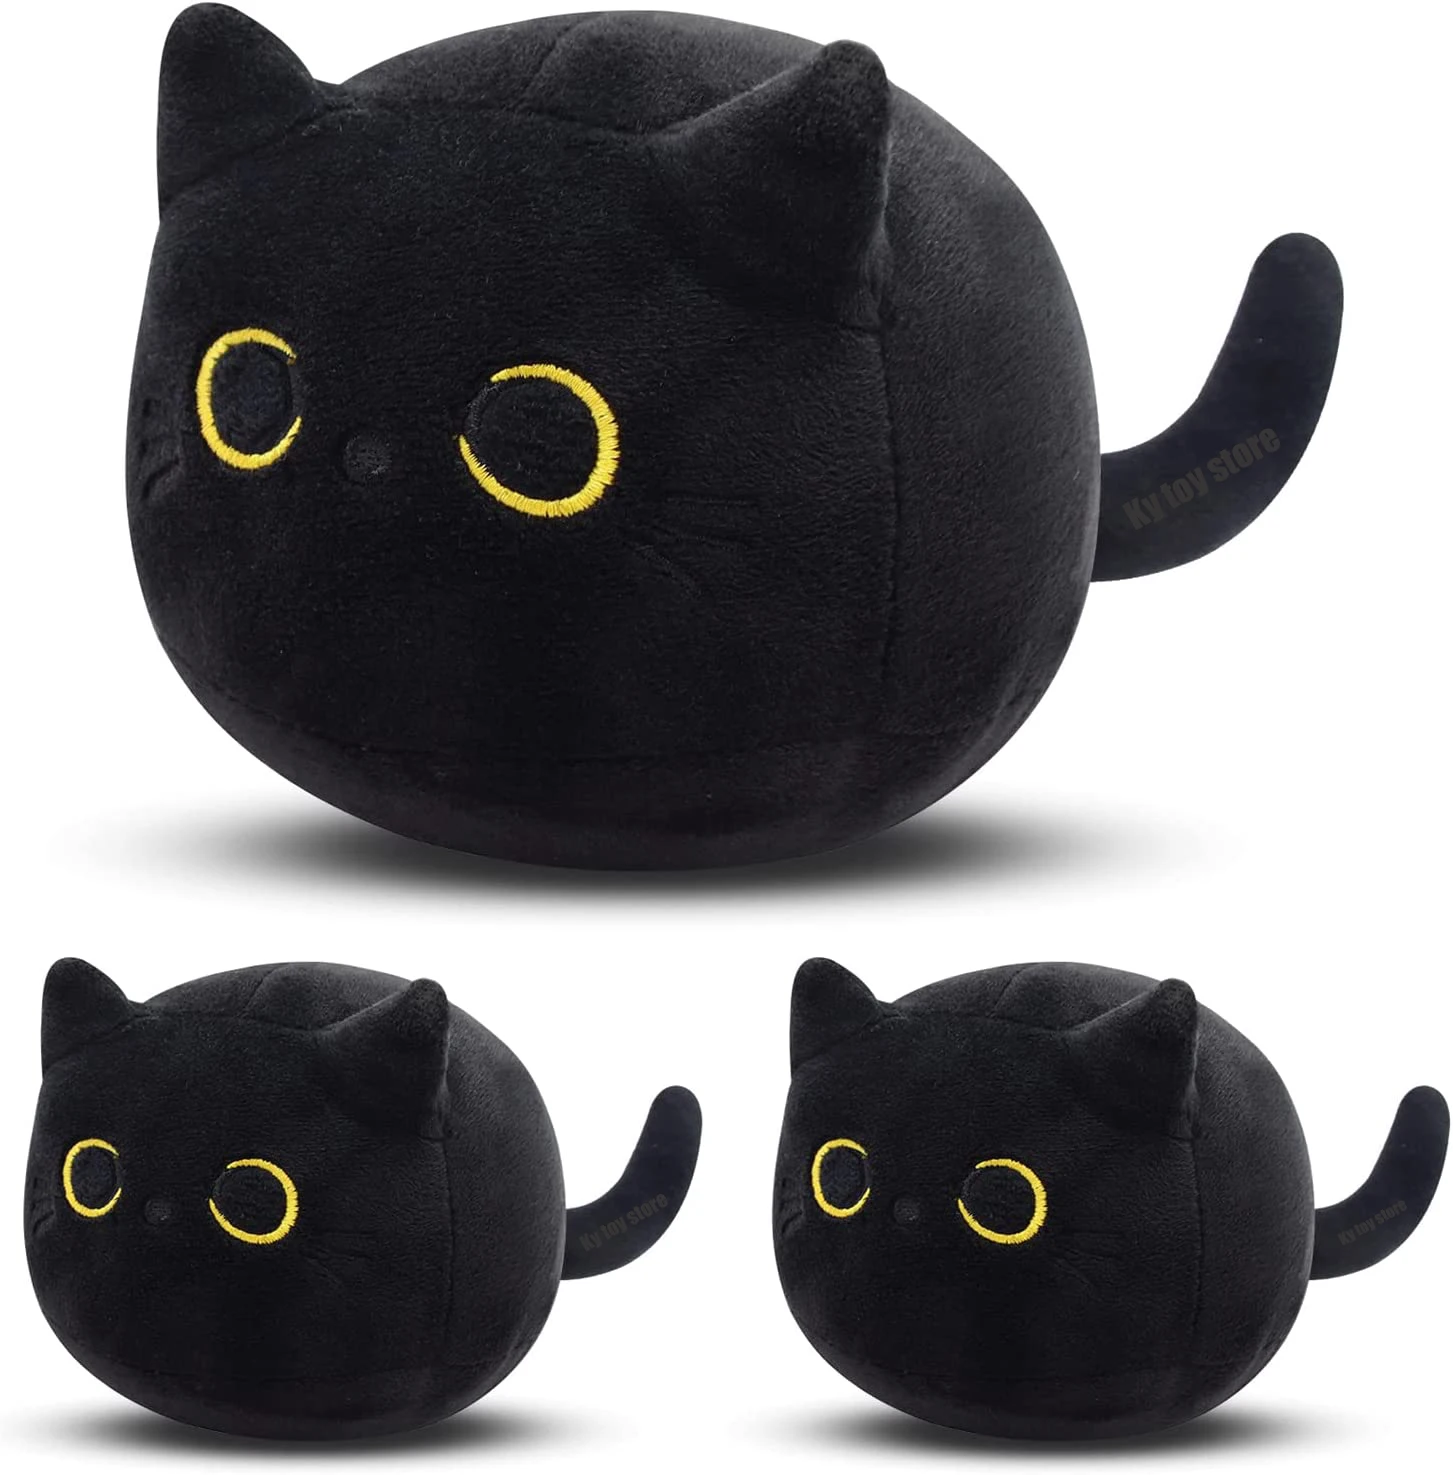 Cute Black Cat Plush Toy 10-55cm 3D Cat Throw Pillow Plushies Kawaii Mini Kitty Stuffed Animal Doll for Sofa Car Decor Kids Gift